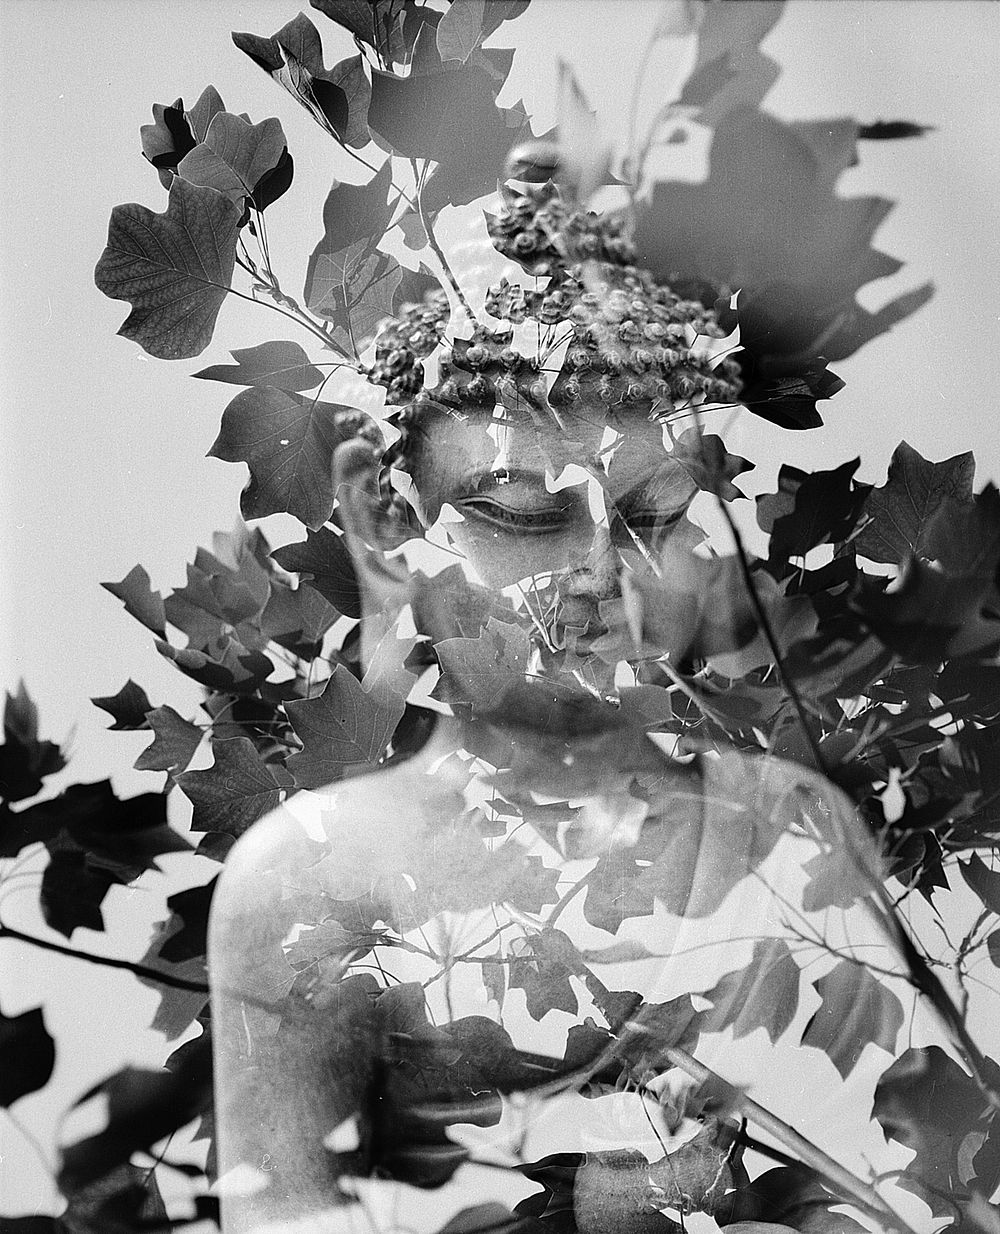 Buddha statue. Free public domain CC0 image.